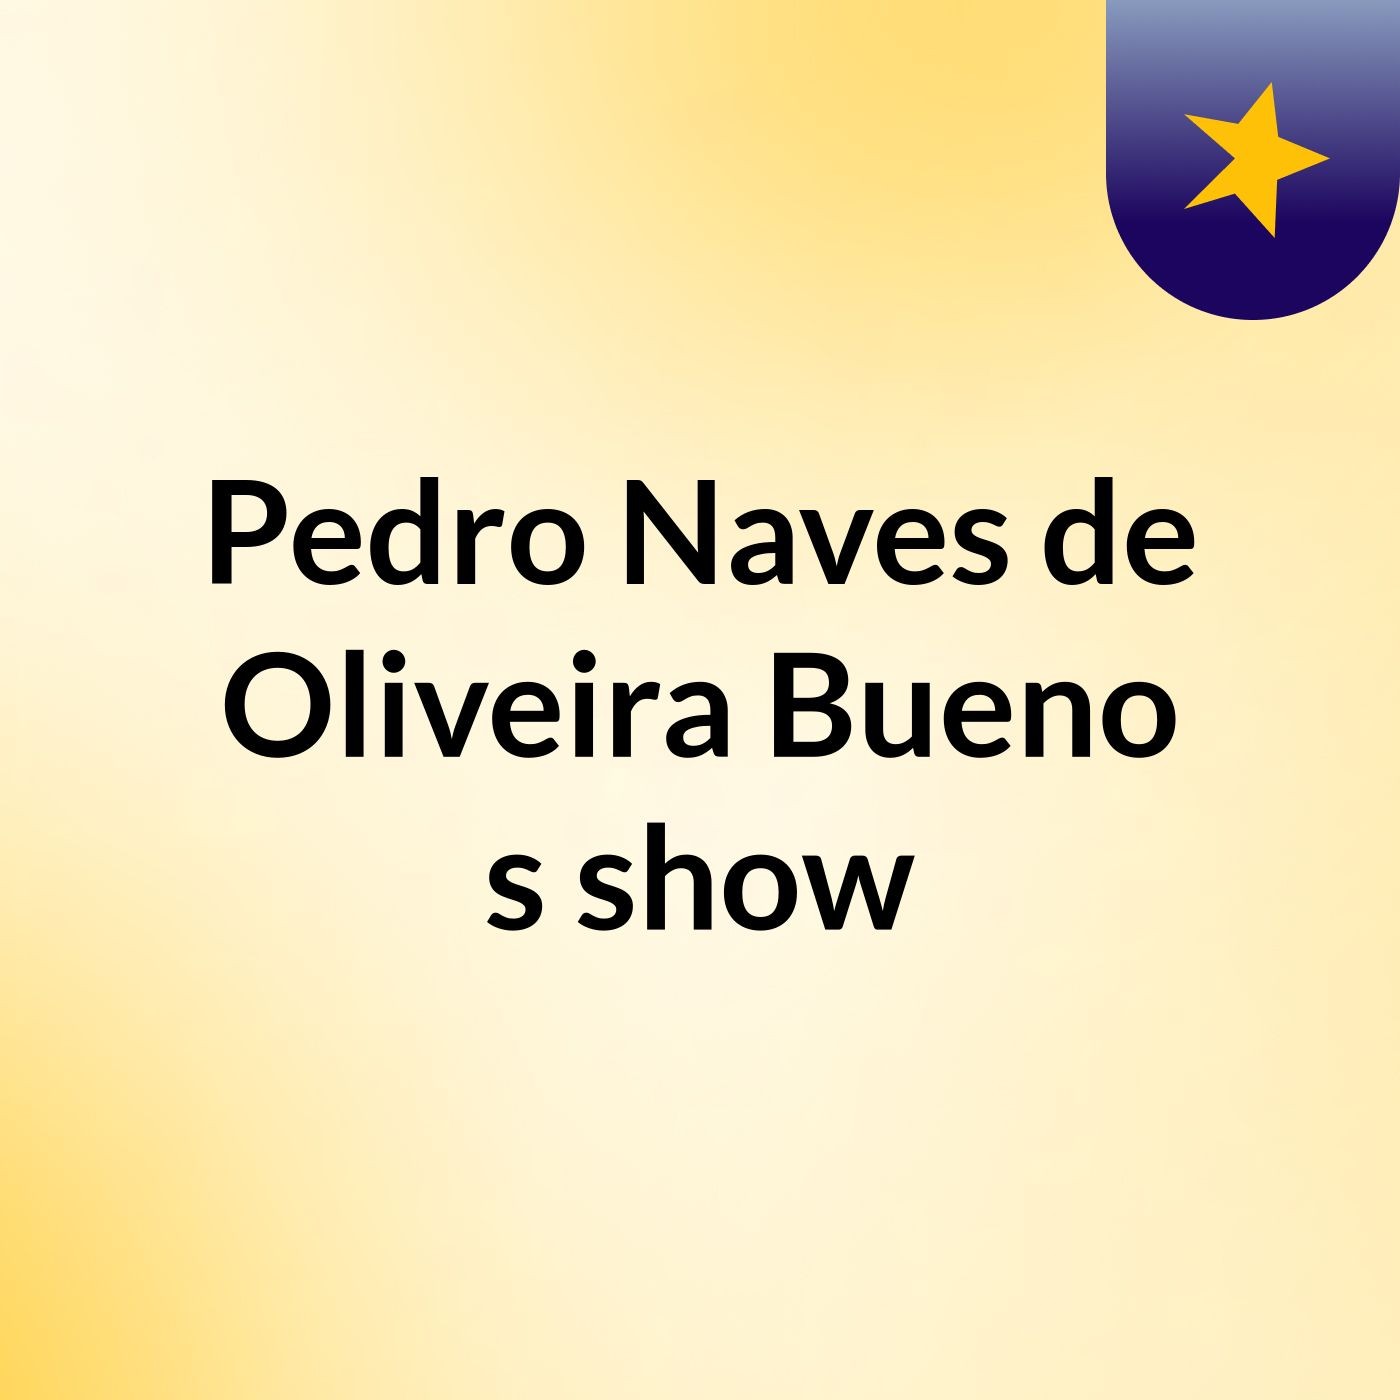 Pedro Naves de Oliveira Bueno's show